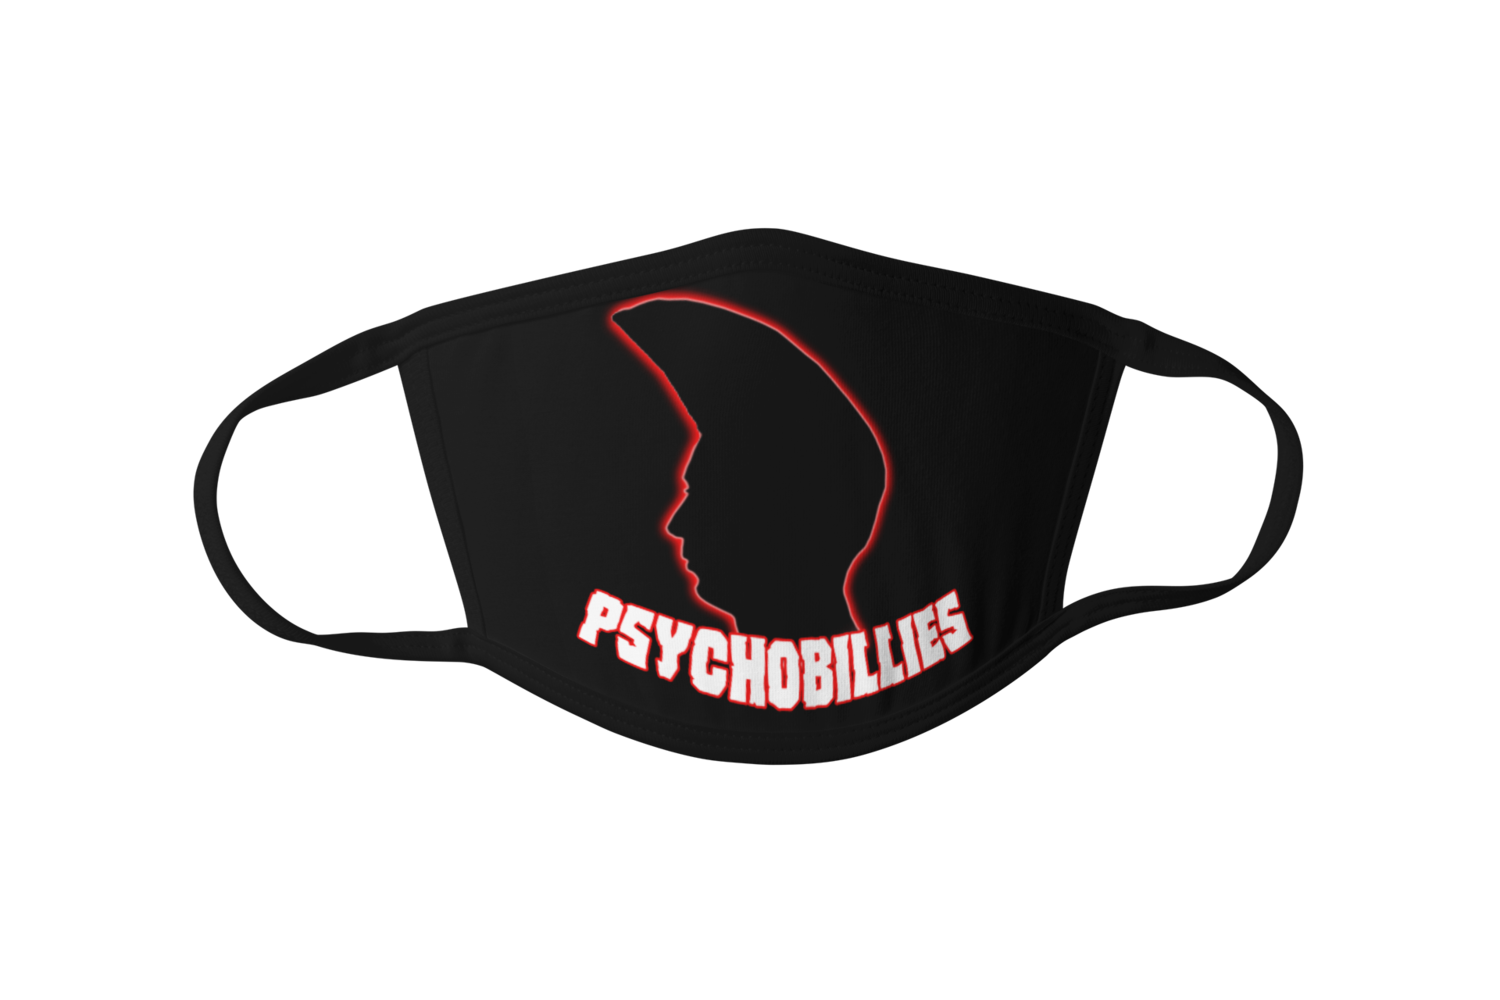 Psychobillies logo Mask